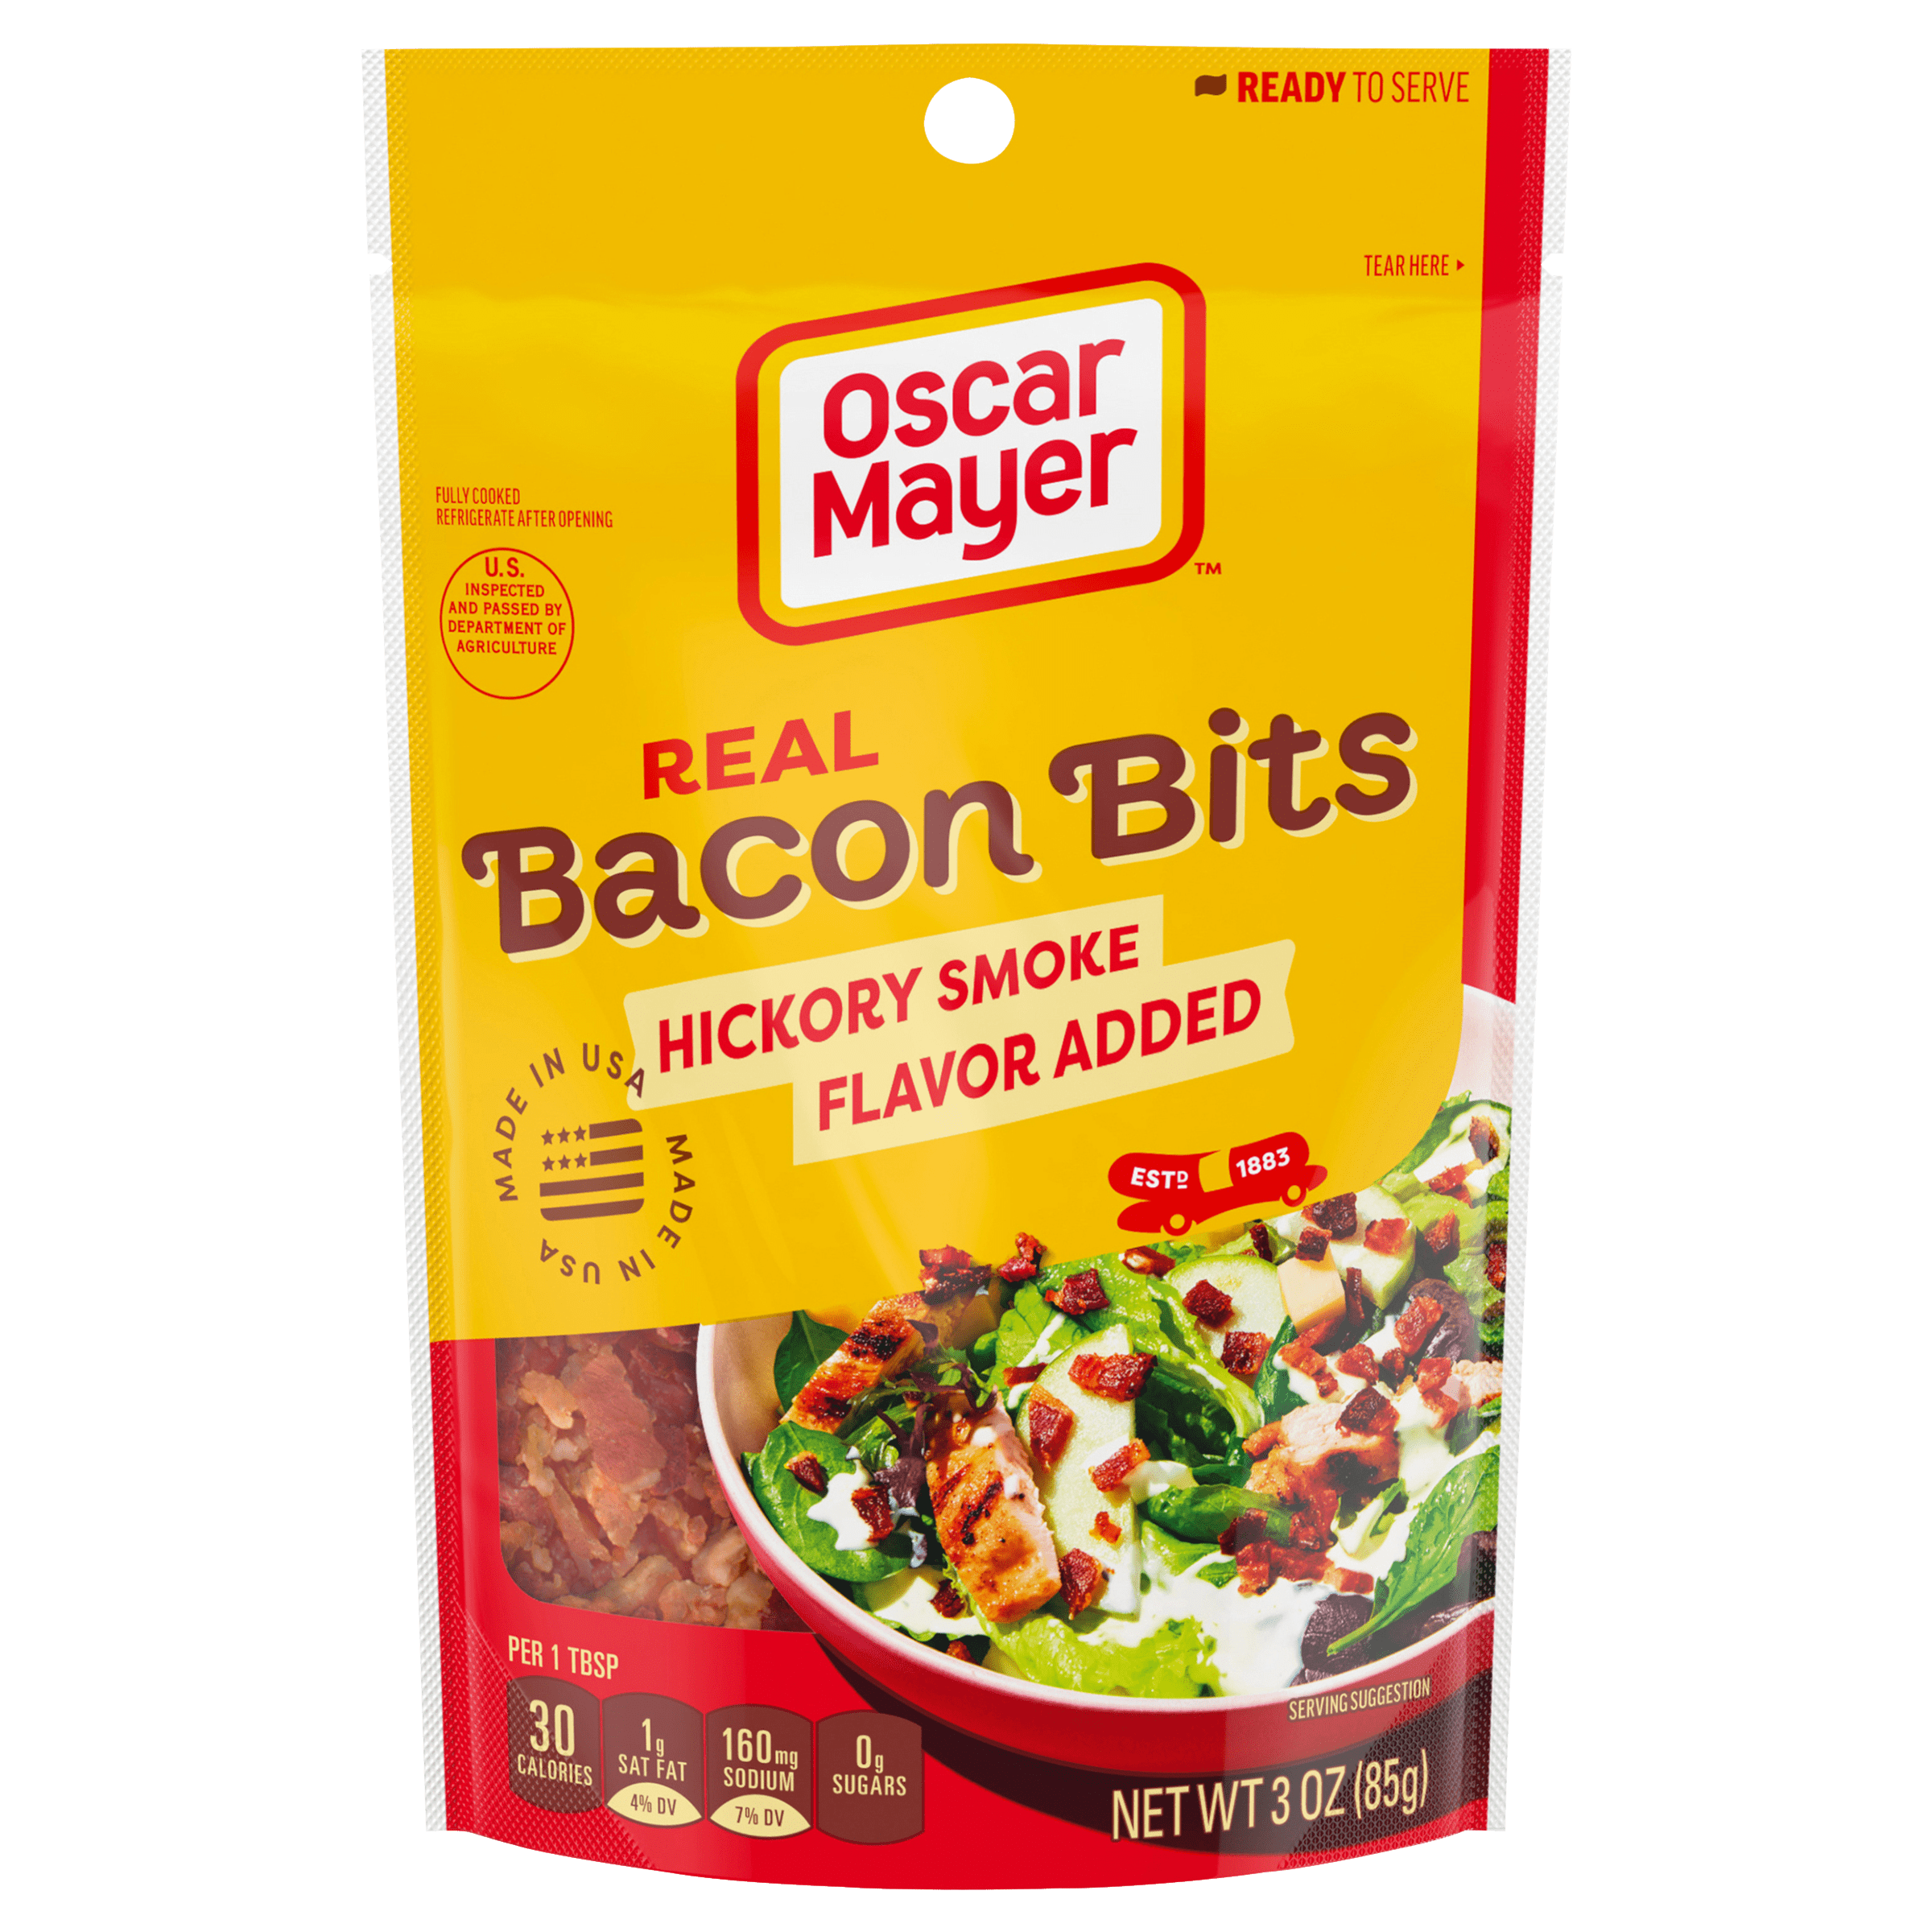 Real Bacon Bits